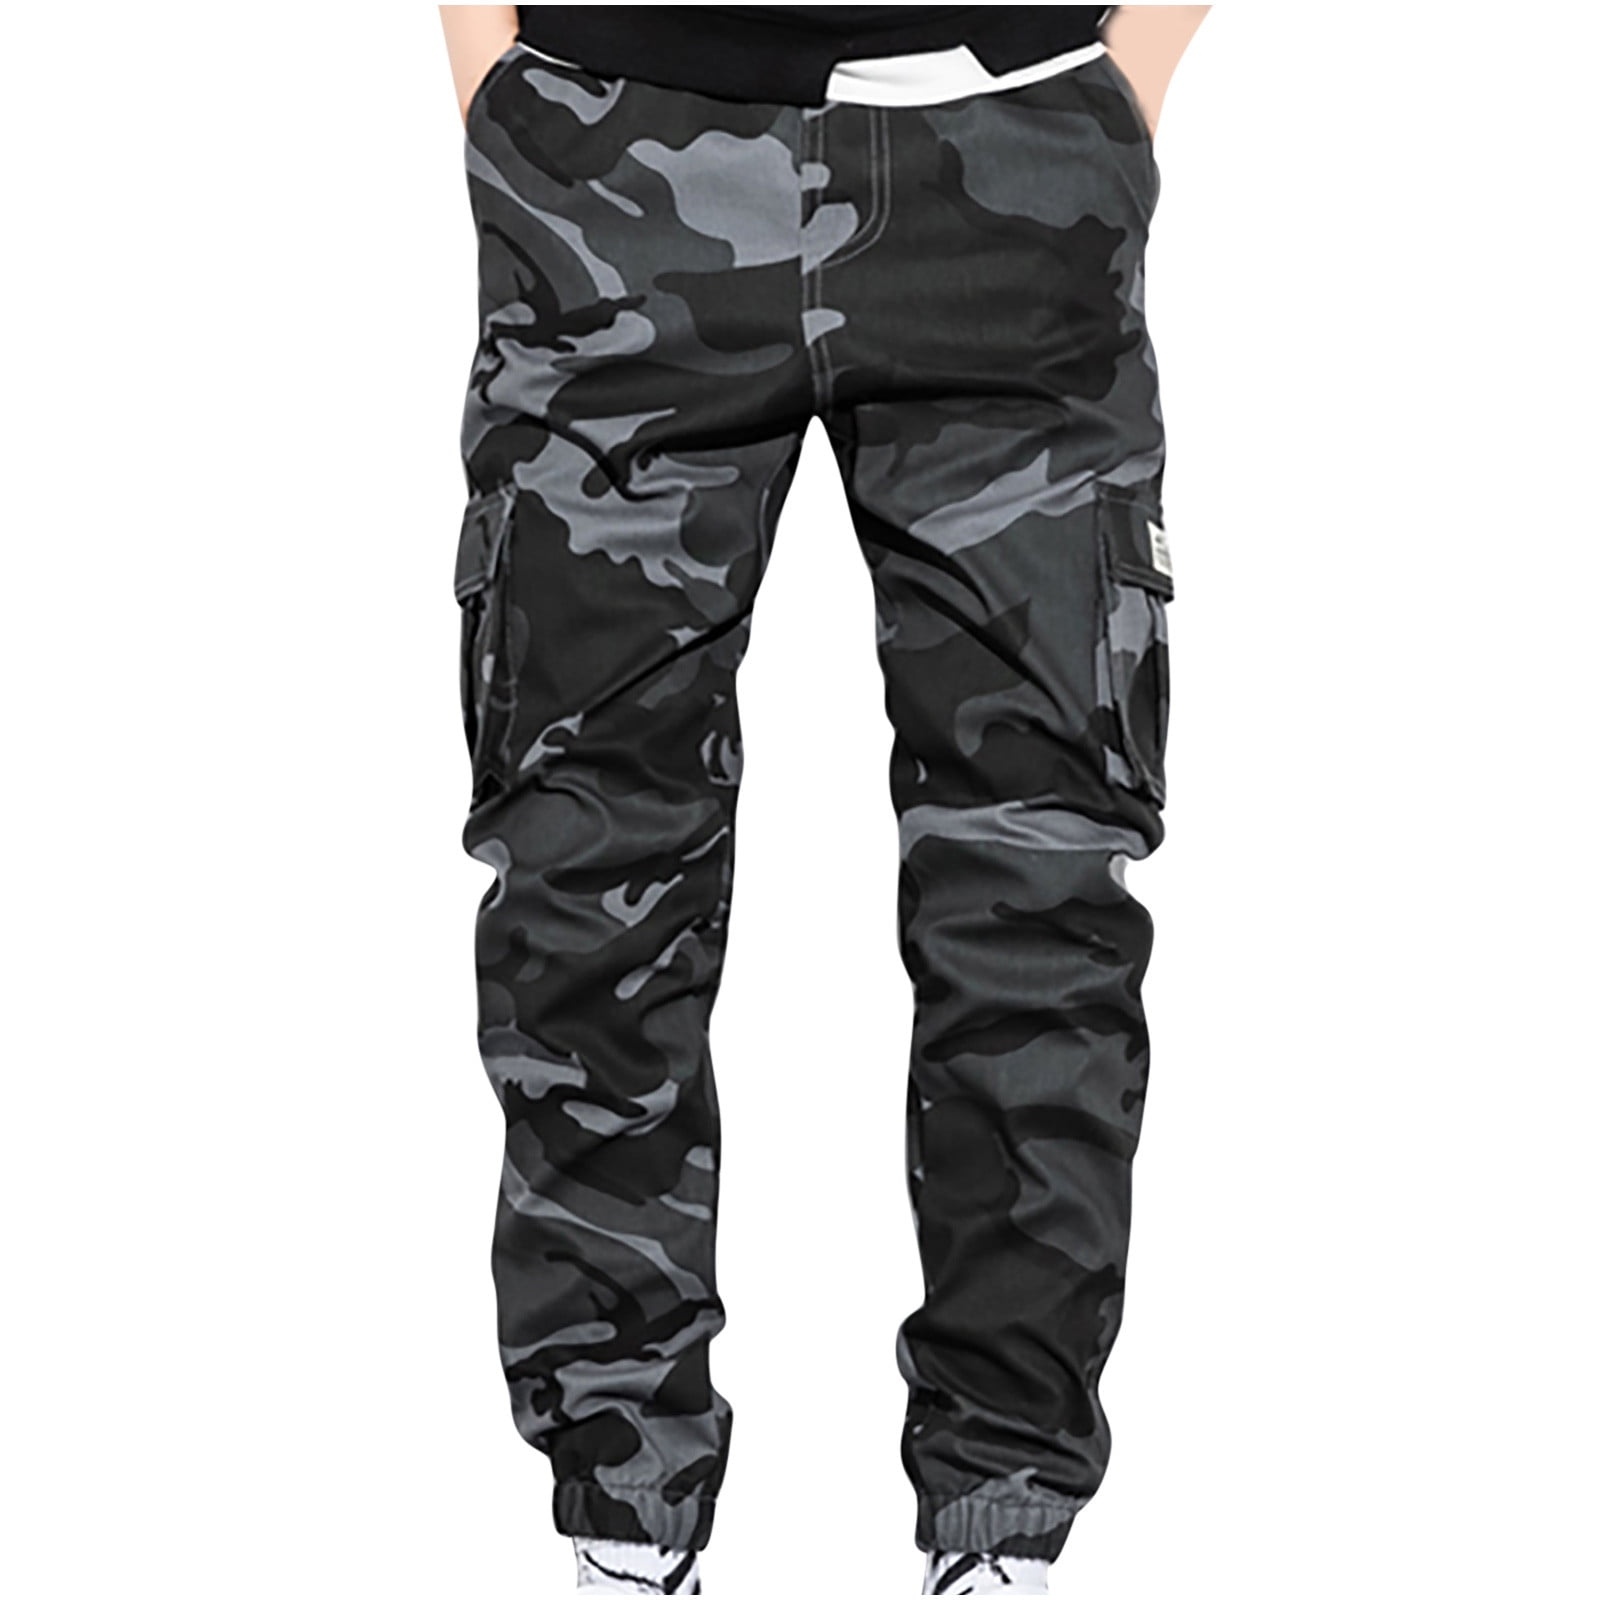 Hfyihgf Plus Size Mens Relaxed Fit Cargo Pants Multi Pocket Slim Fit  Stretch Joggers Pant Camo Combat Work Trousers(Black,XXL) 